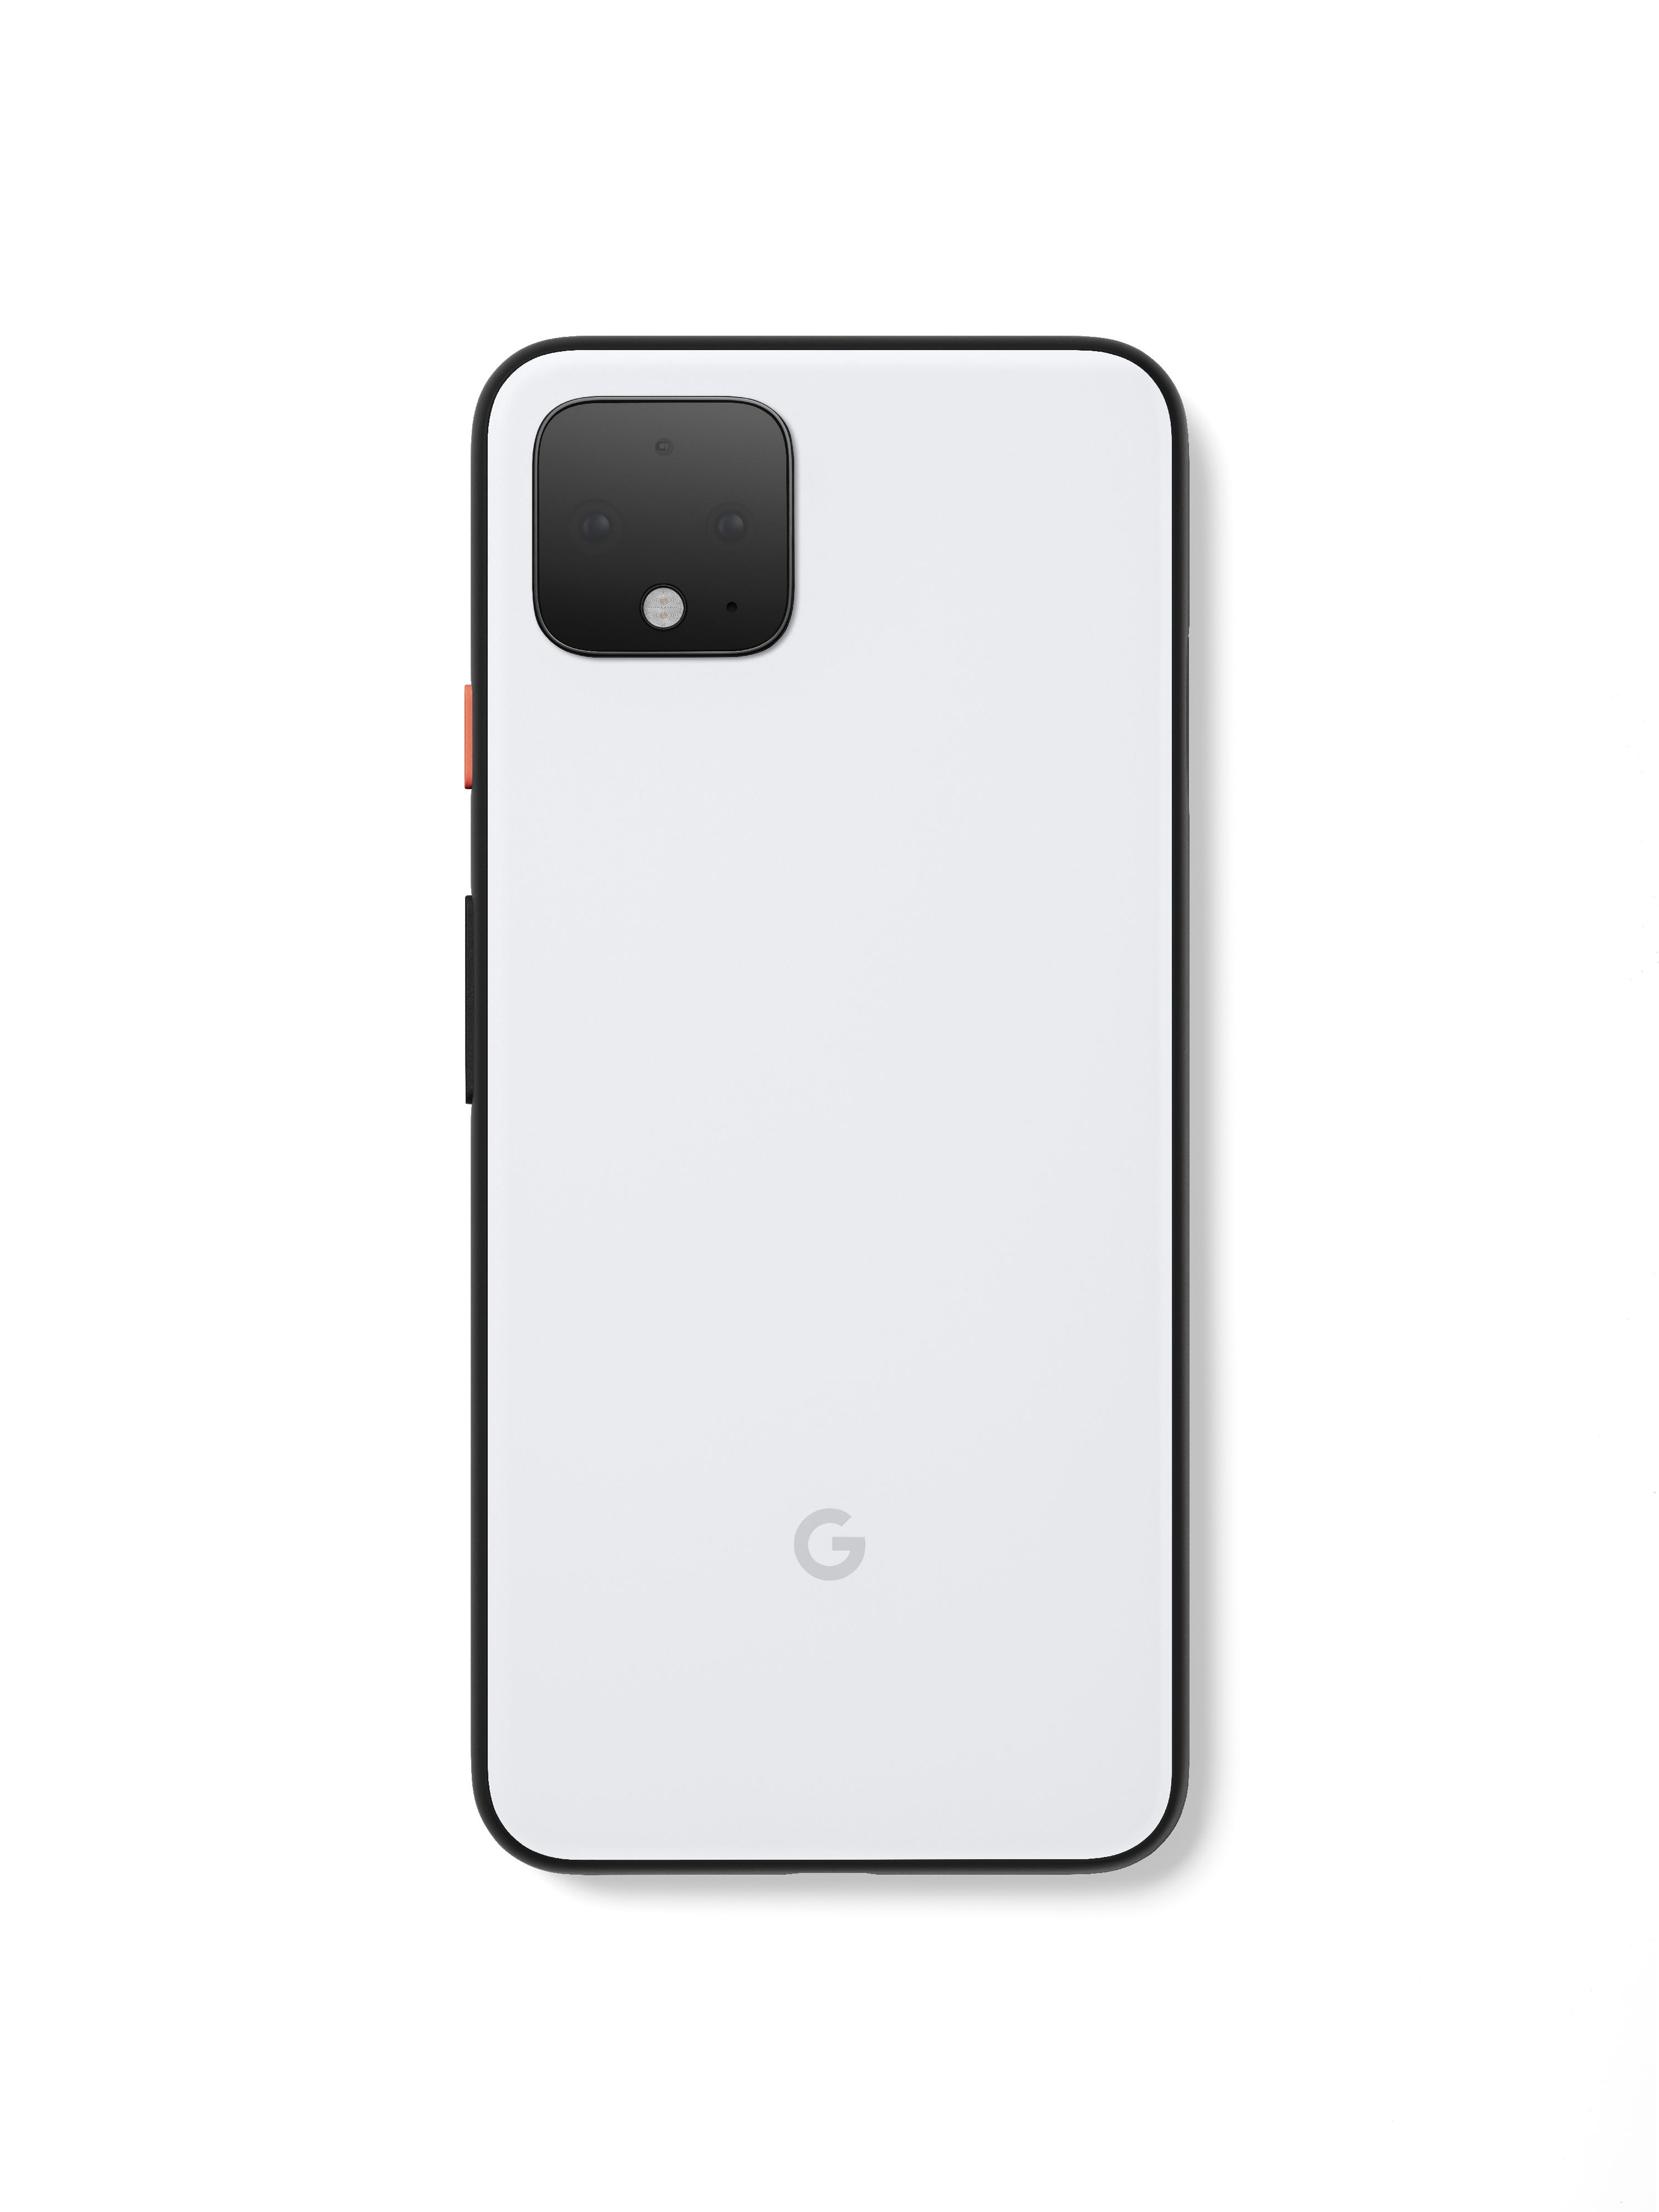 Google Pixel 4 White 64 GB, Unlocked - image 2 of 4